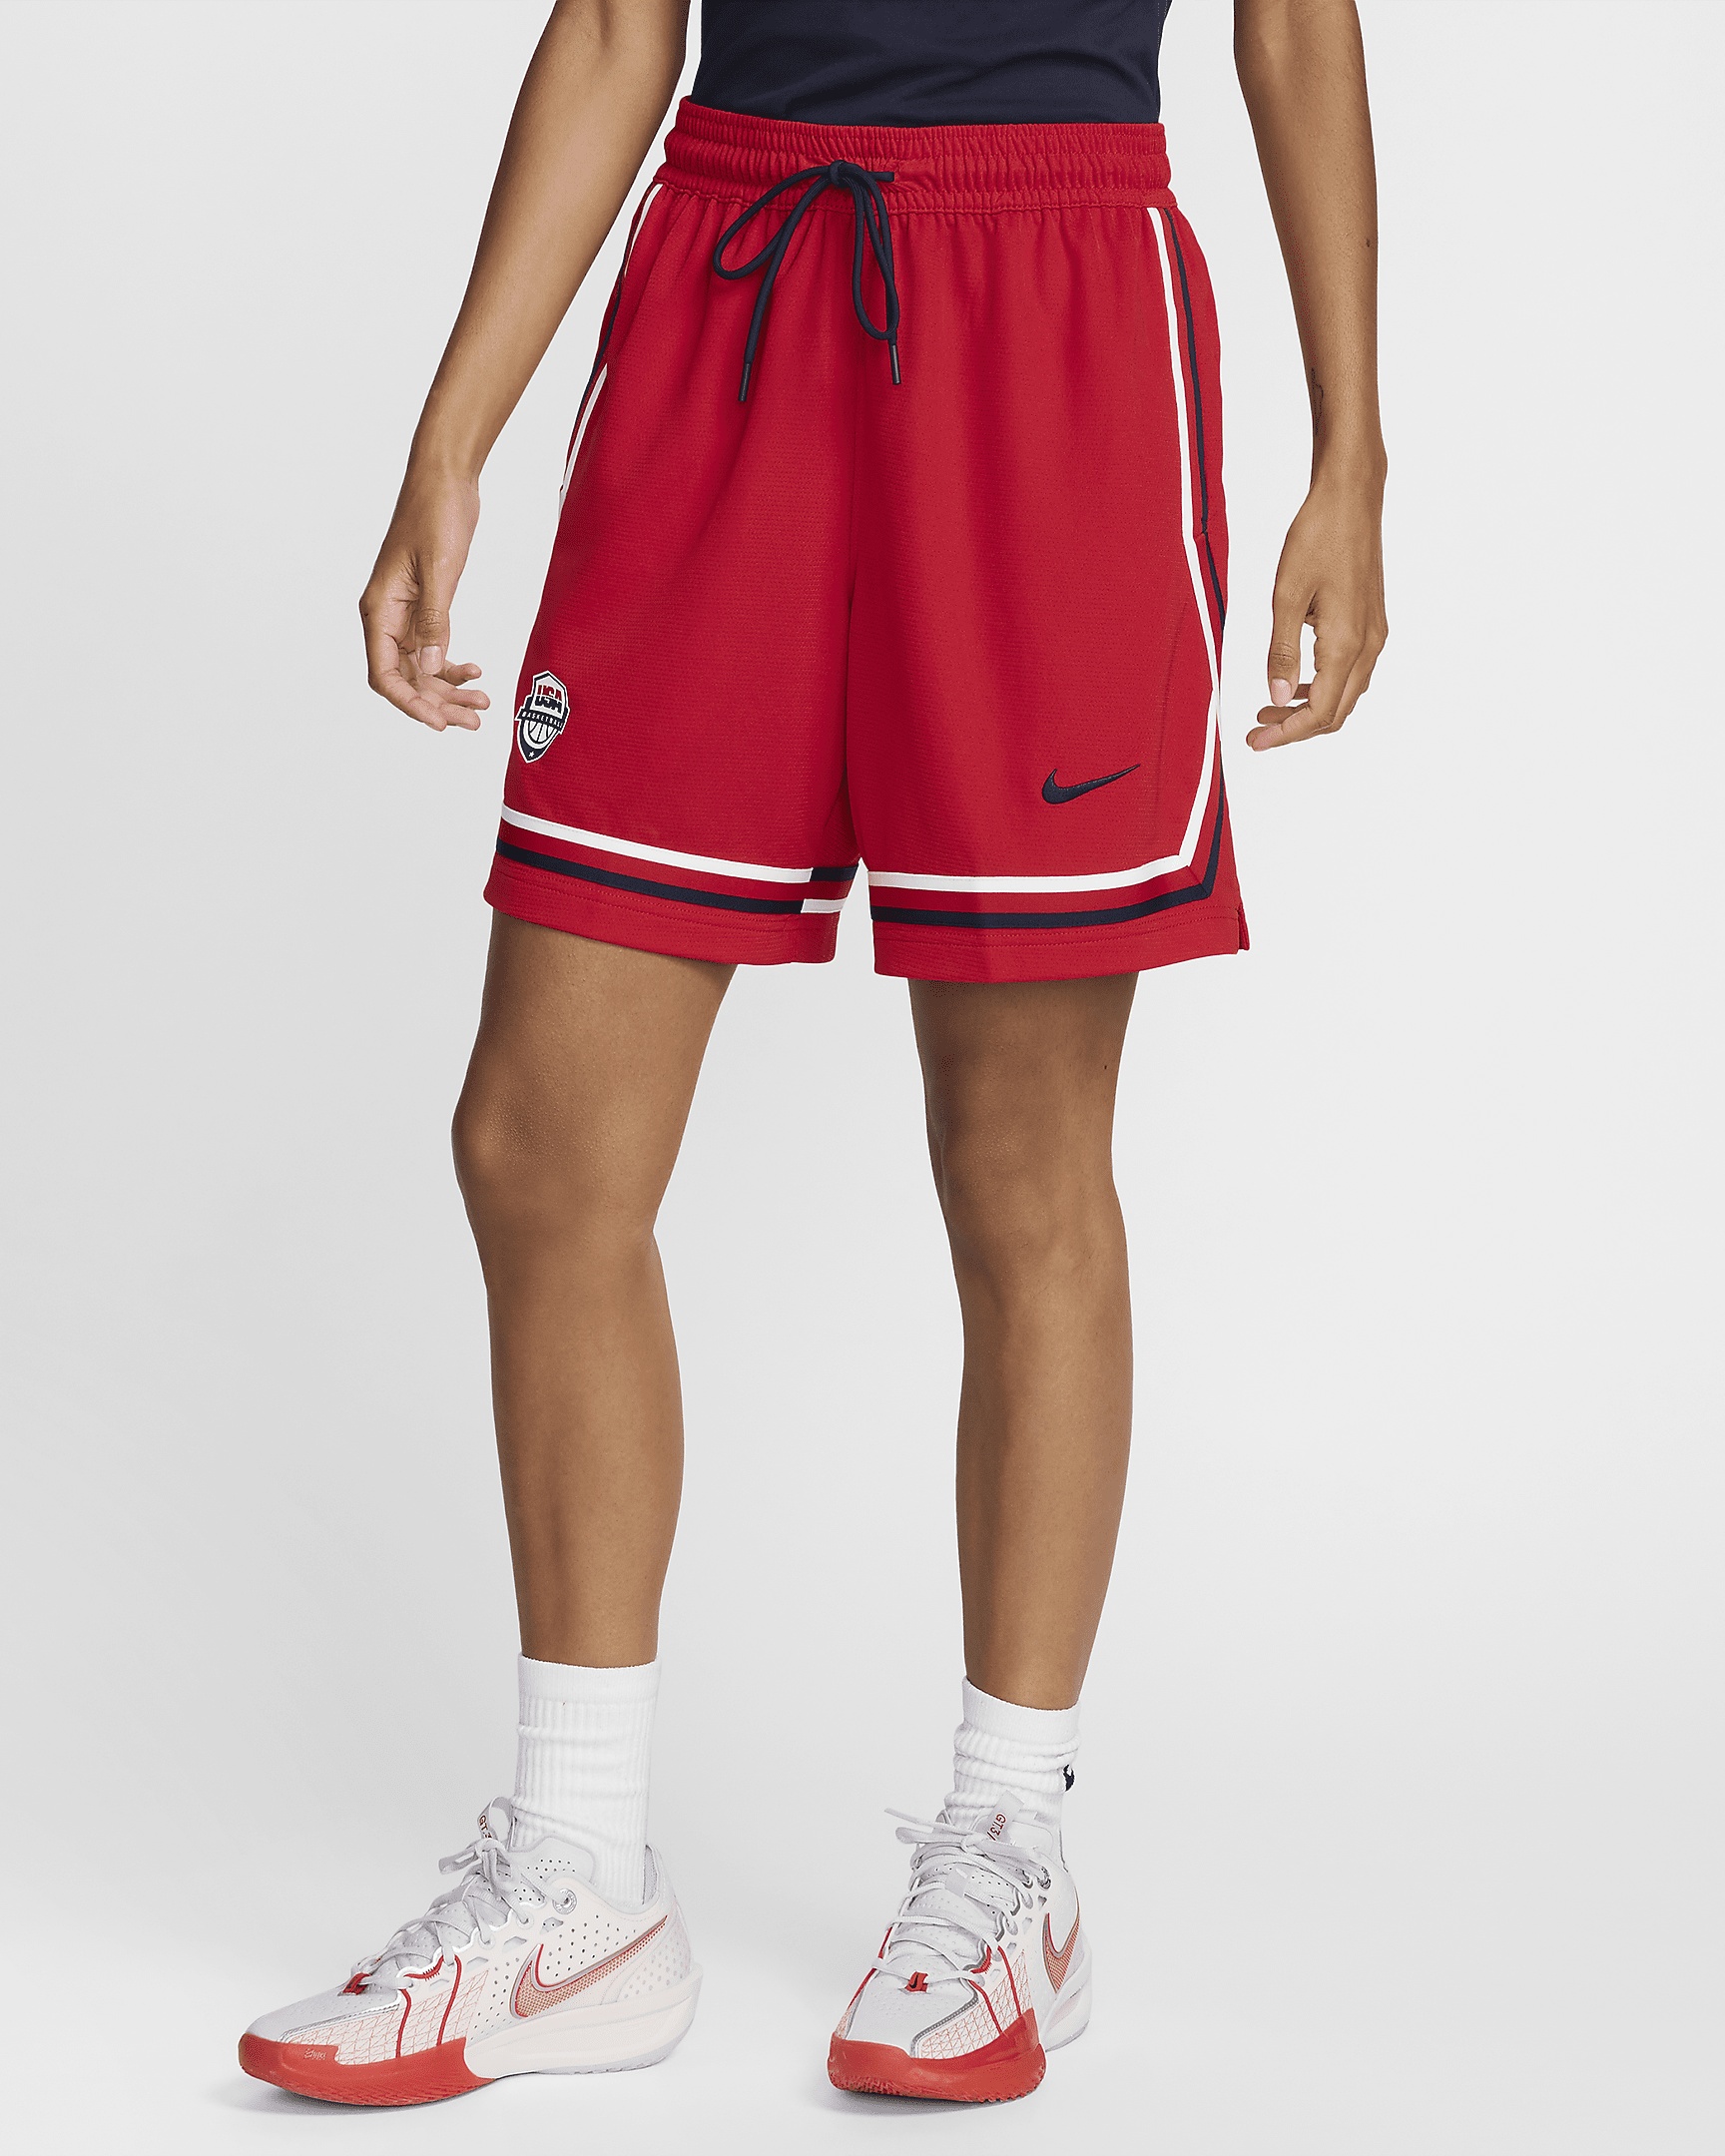 USAB Practice Women's Nike Basketball Shorts - 1